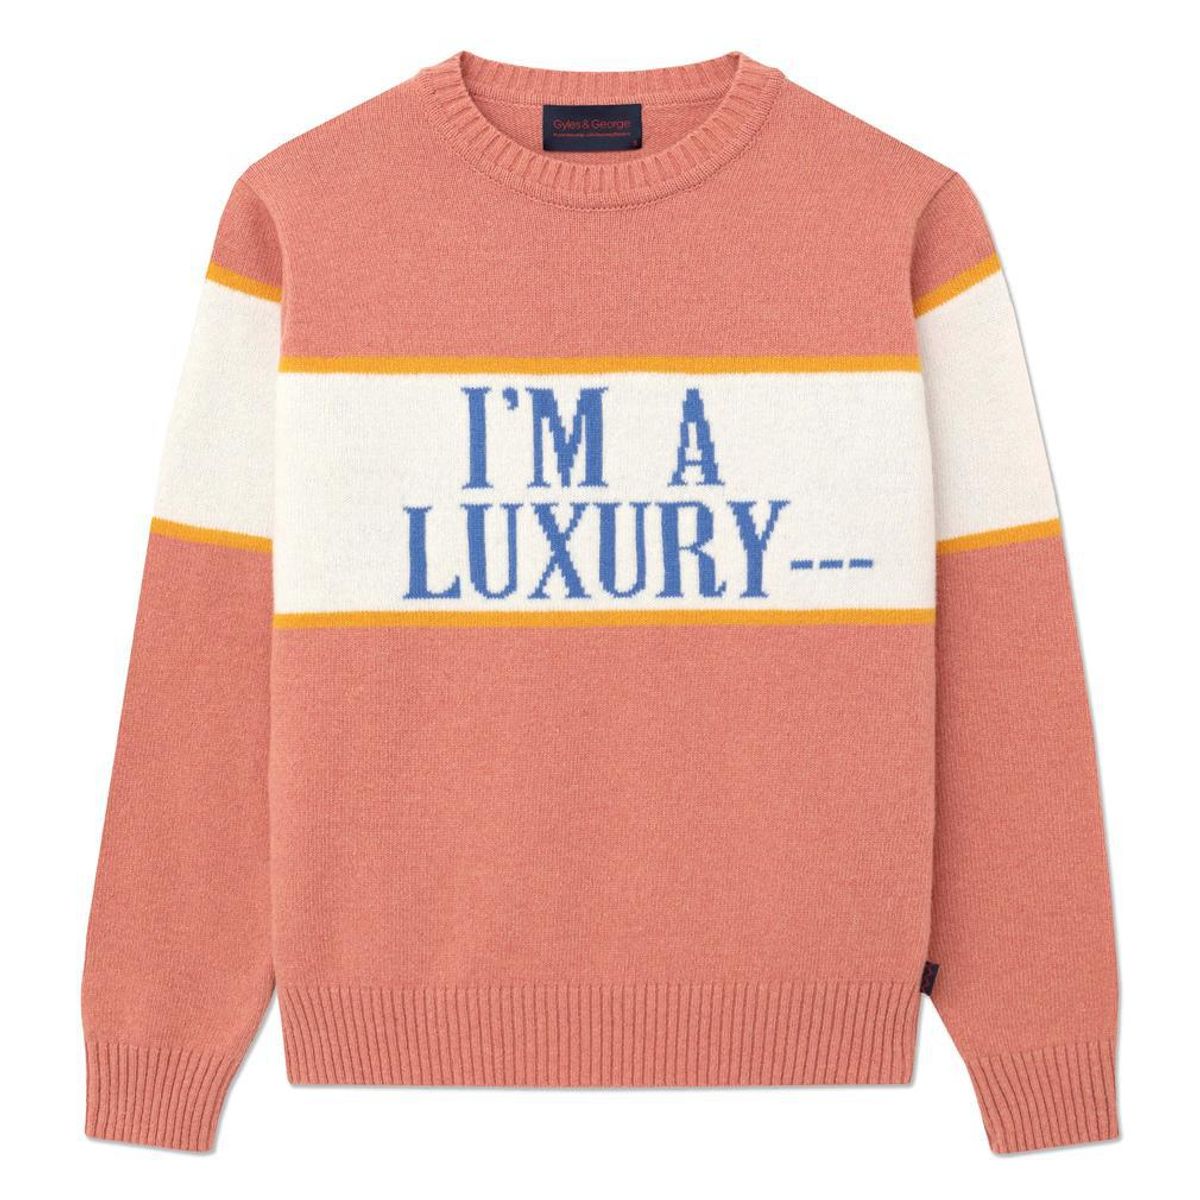 x Gyles & George Men’s “I’m a Luxury” Sweater